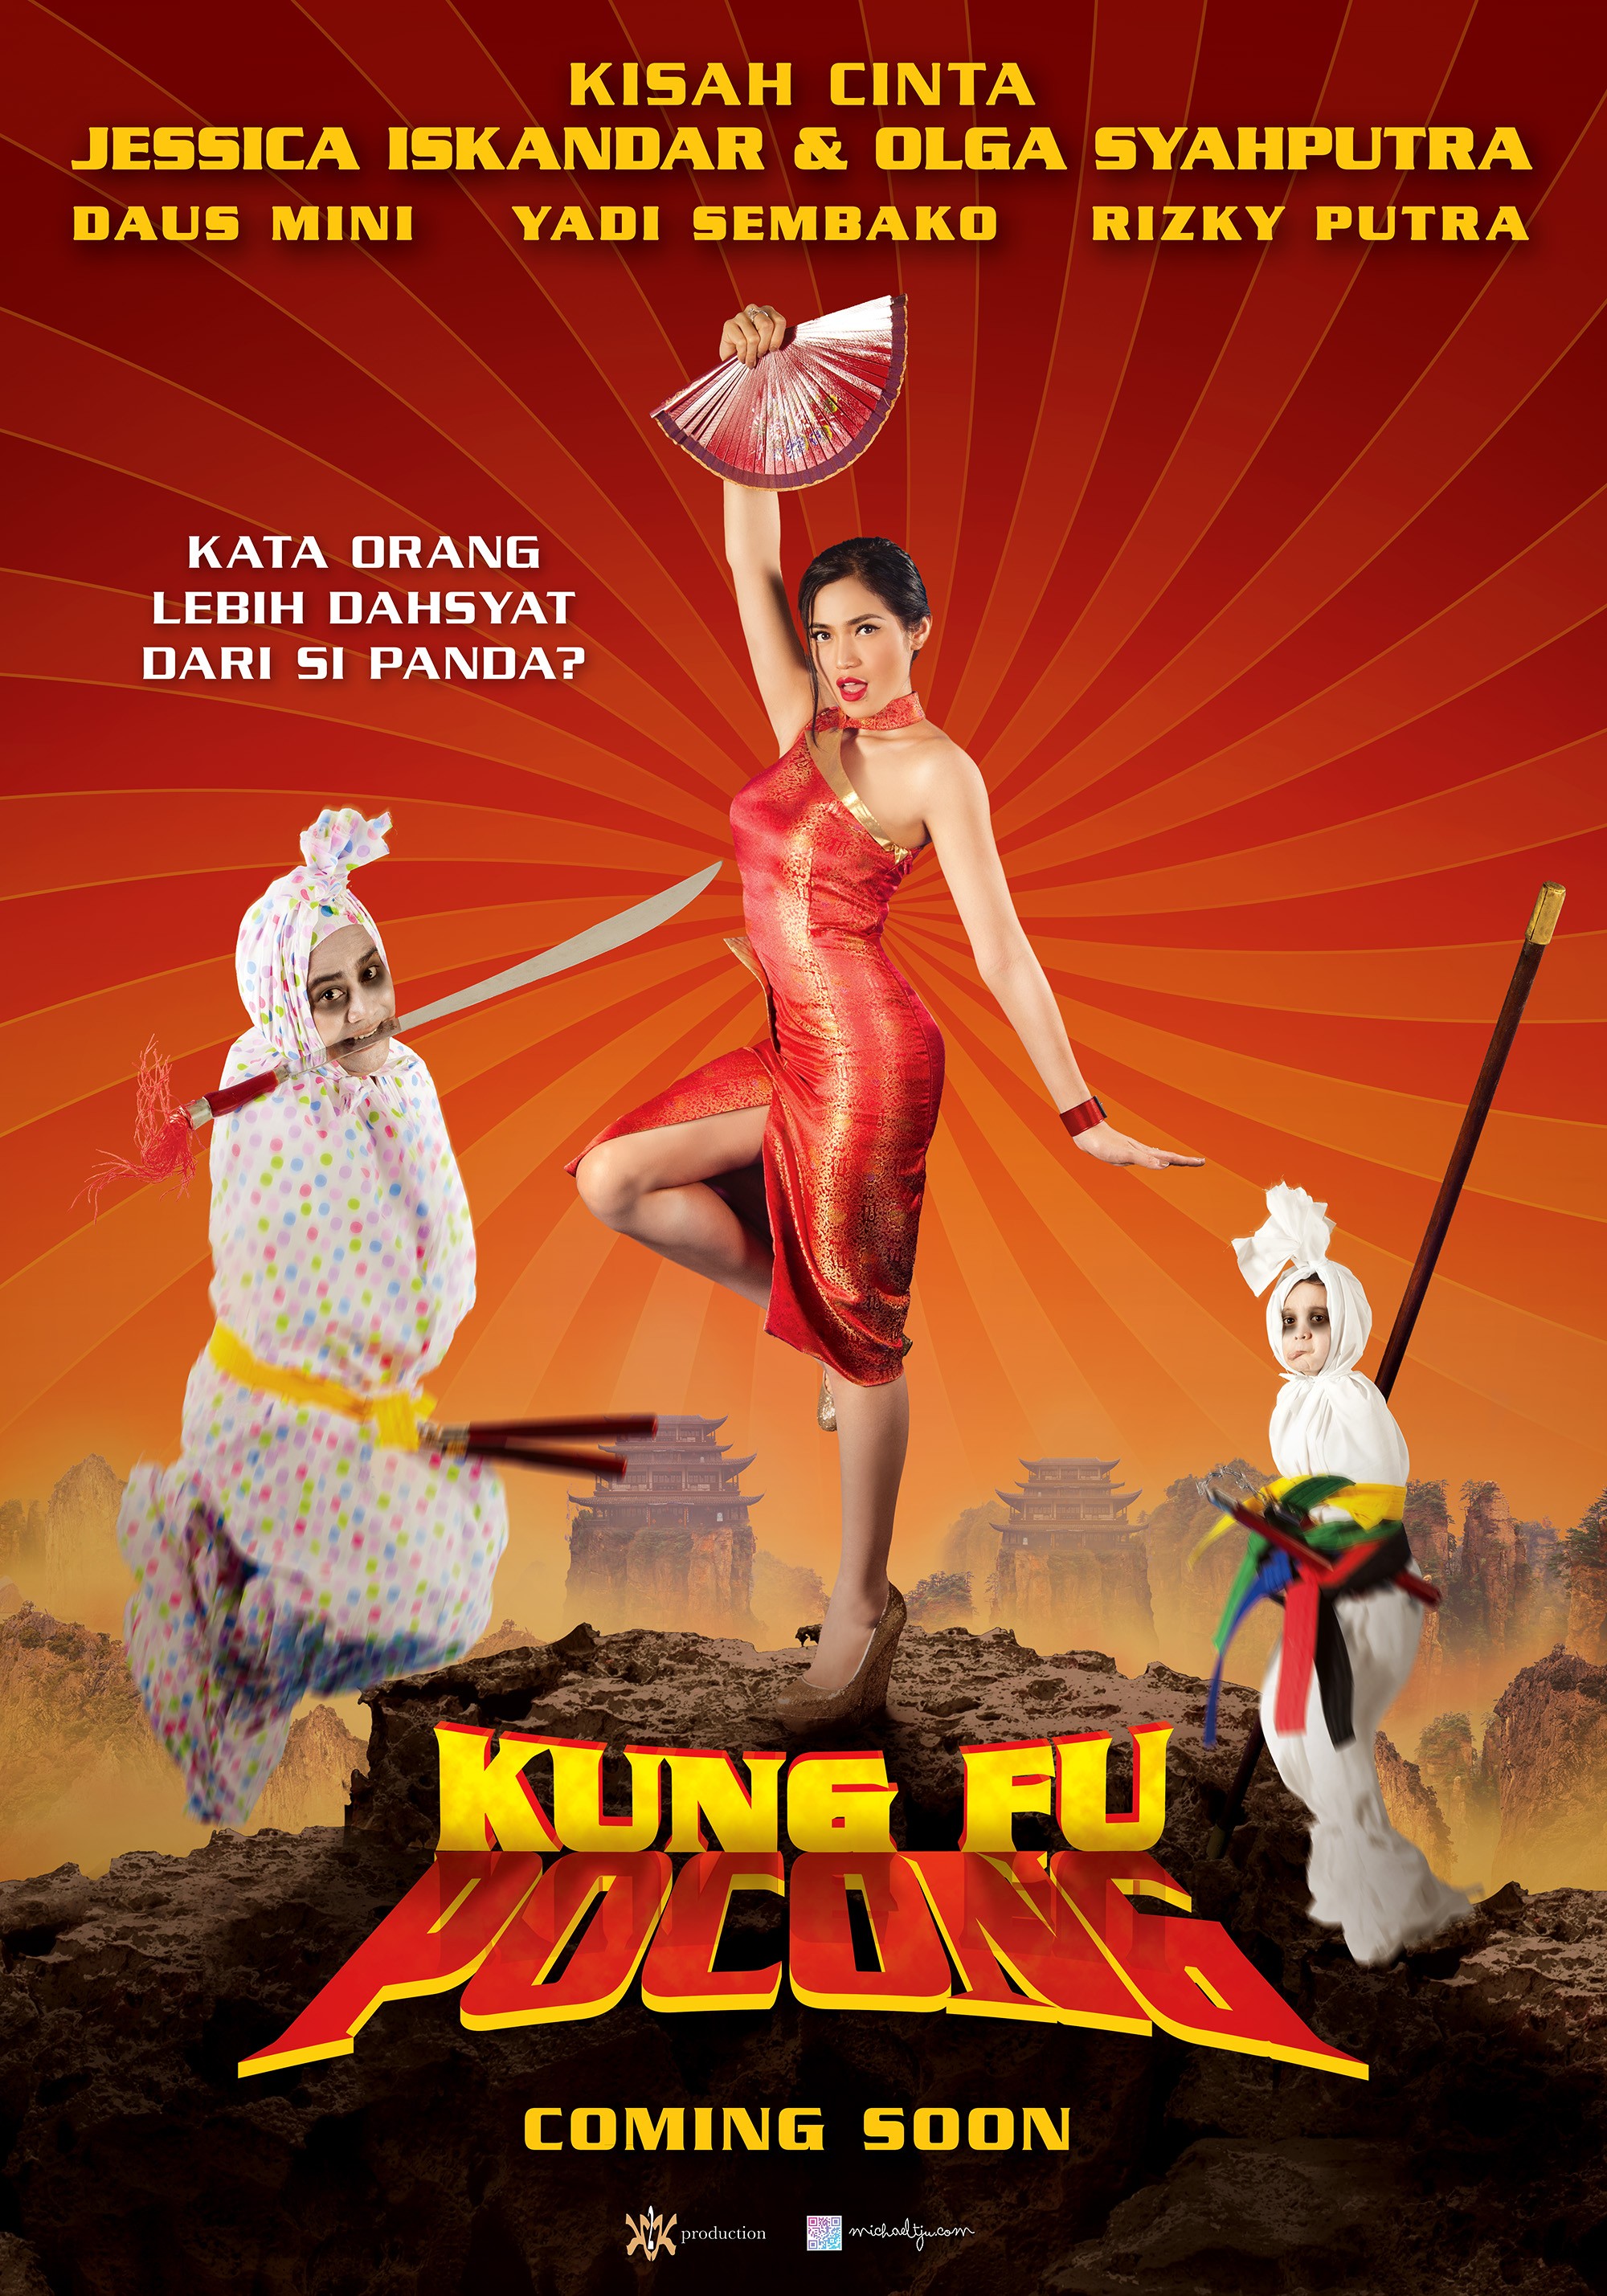 Mega Sized Movie Poster Image for Kung fu pocong perawan 